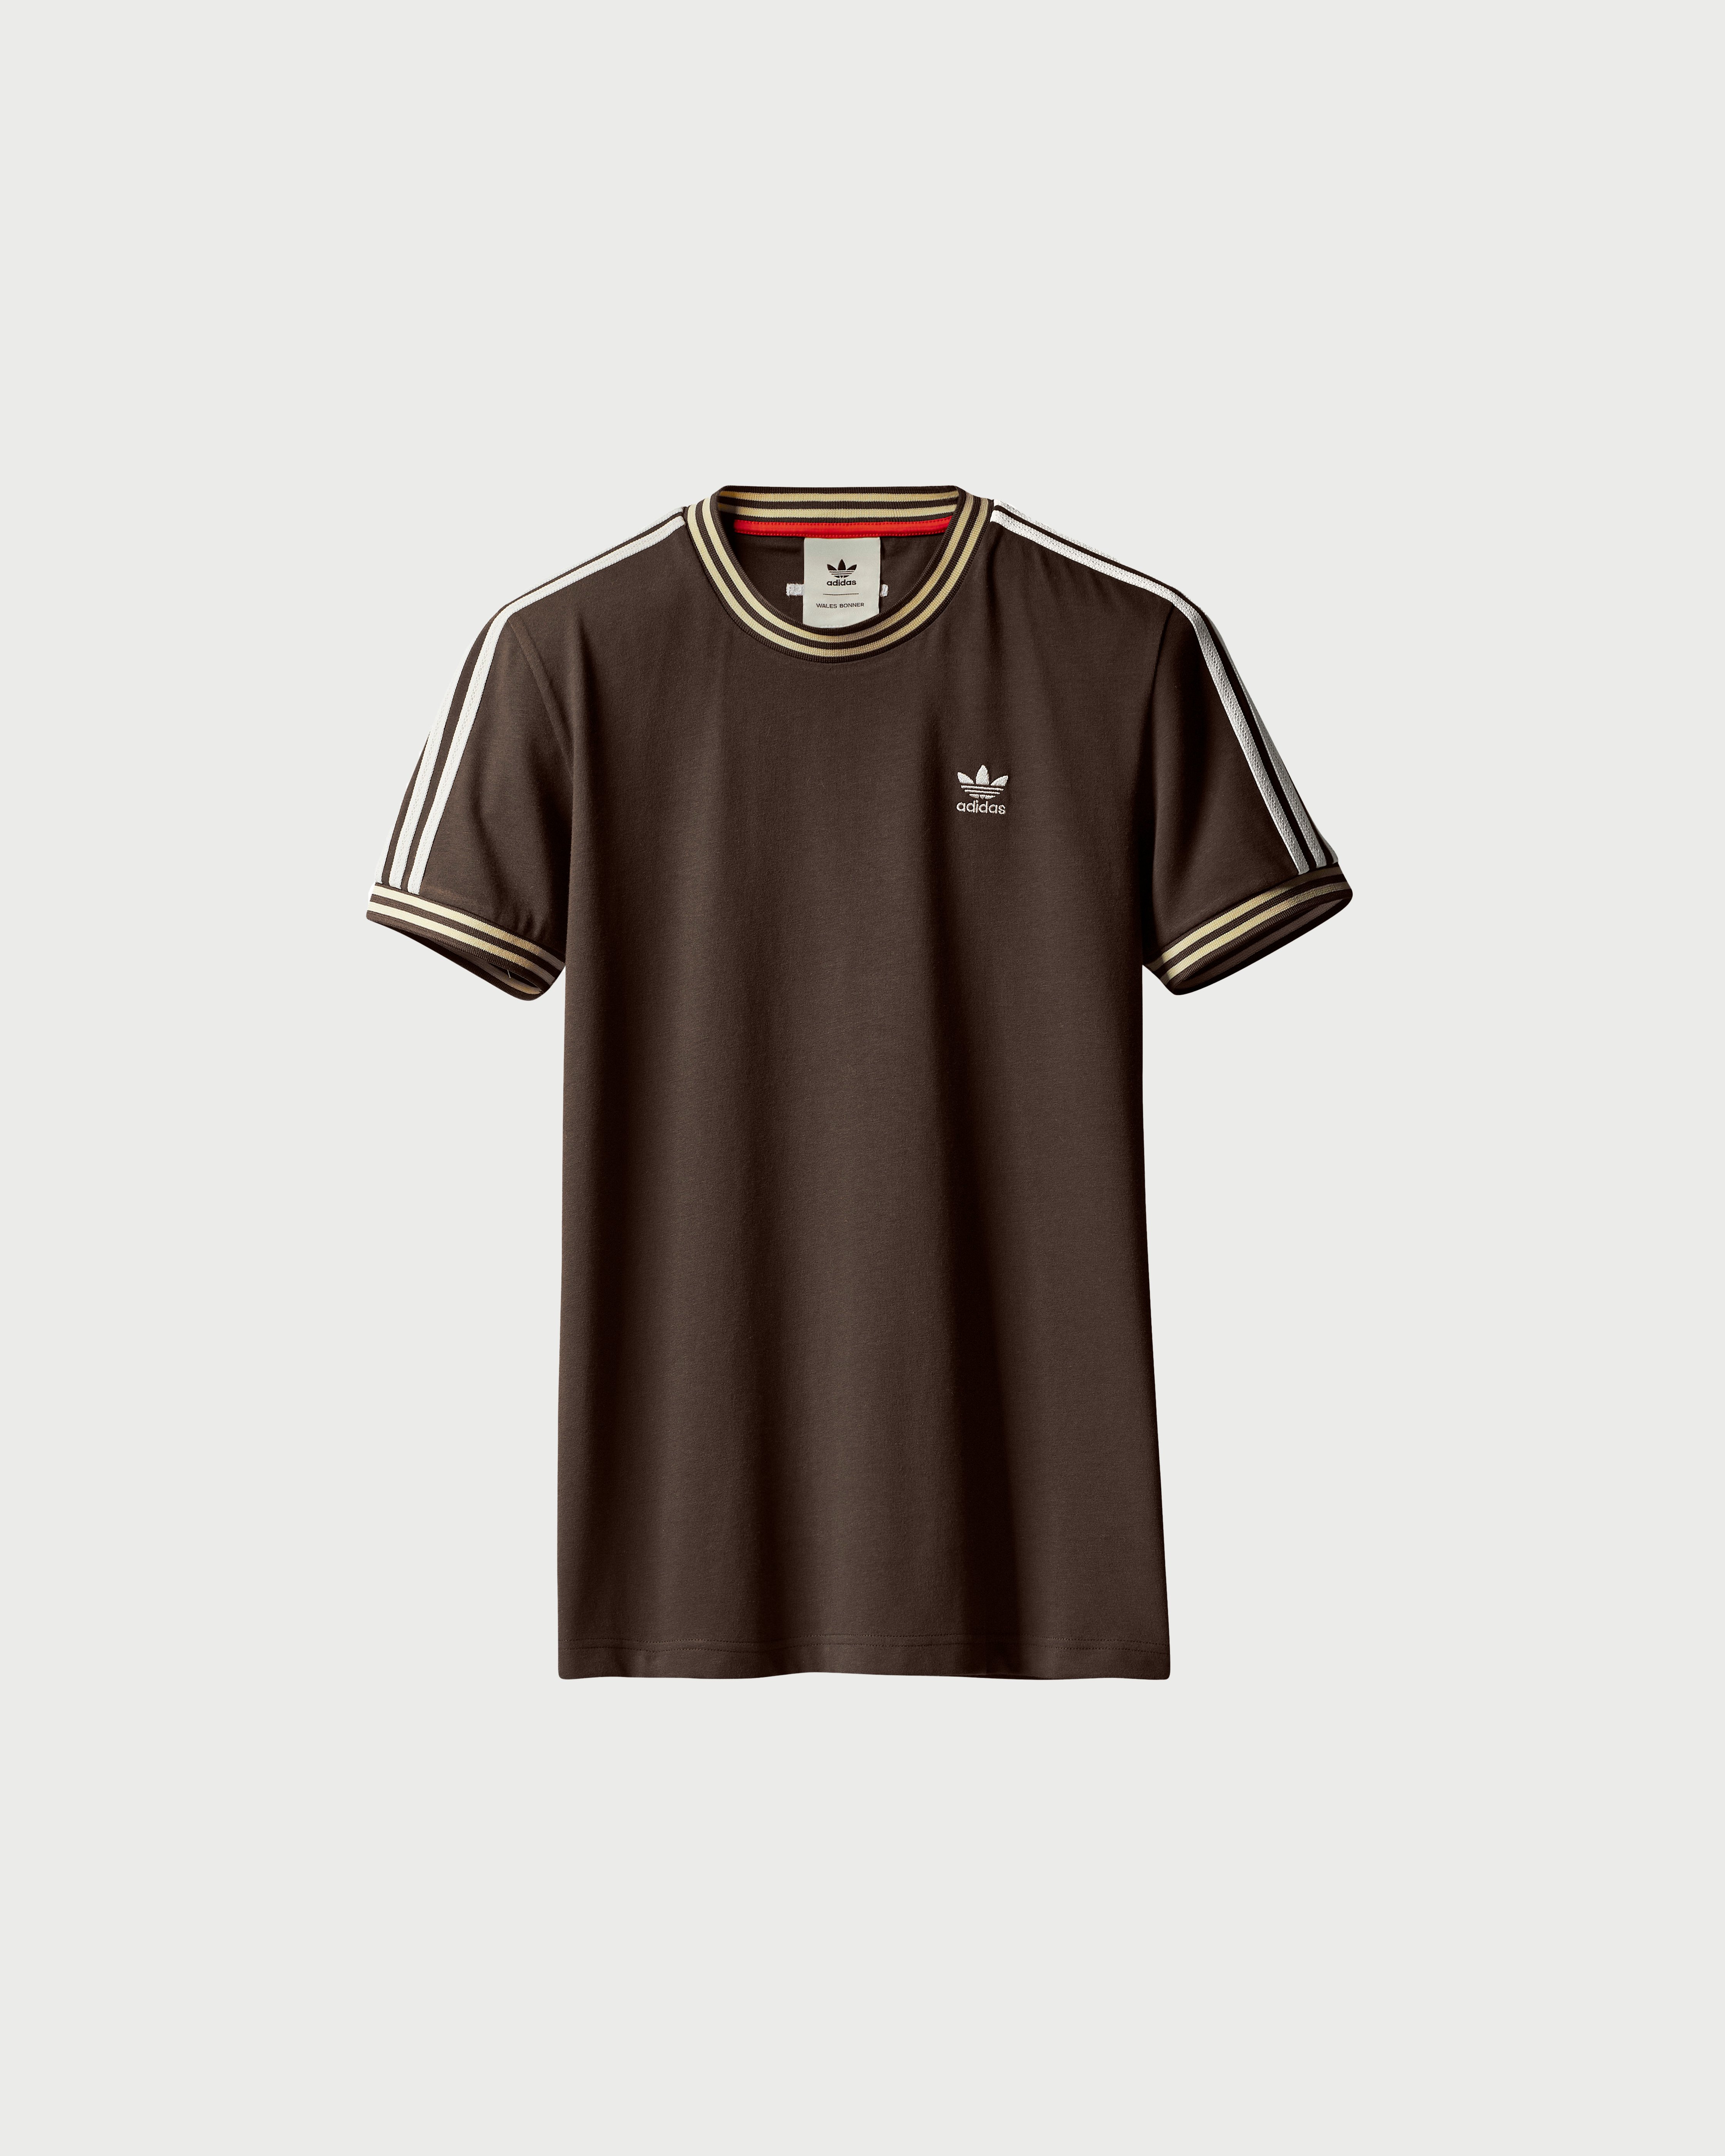 Adidas x Wales Bonner - Tee Brown - Clothing - Brown - Image 1